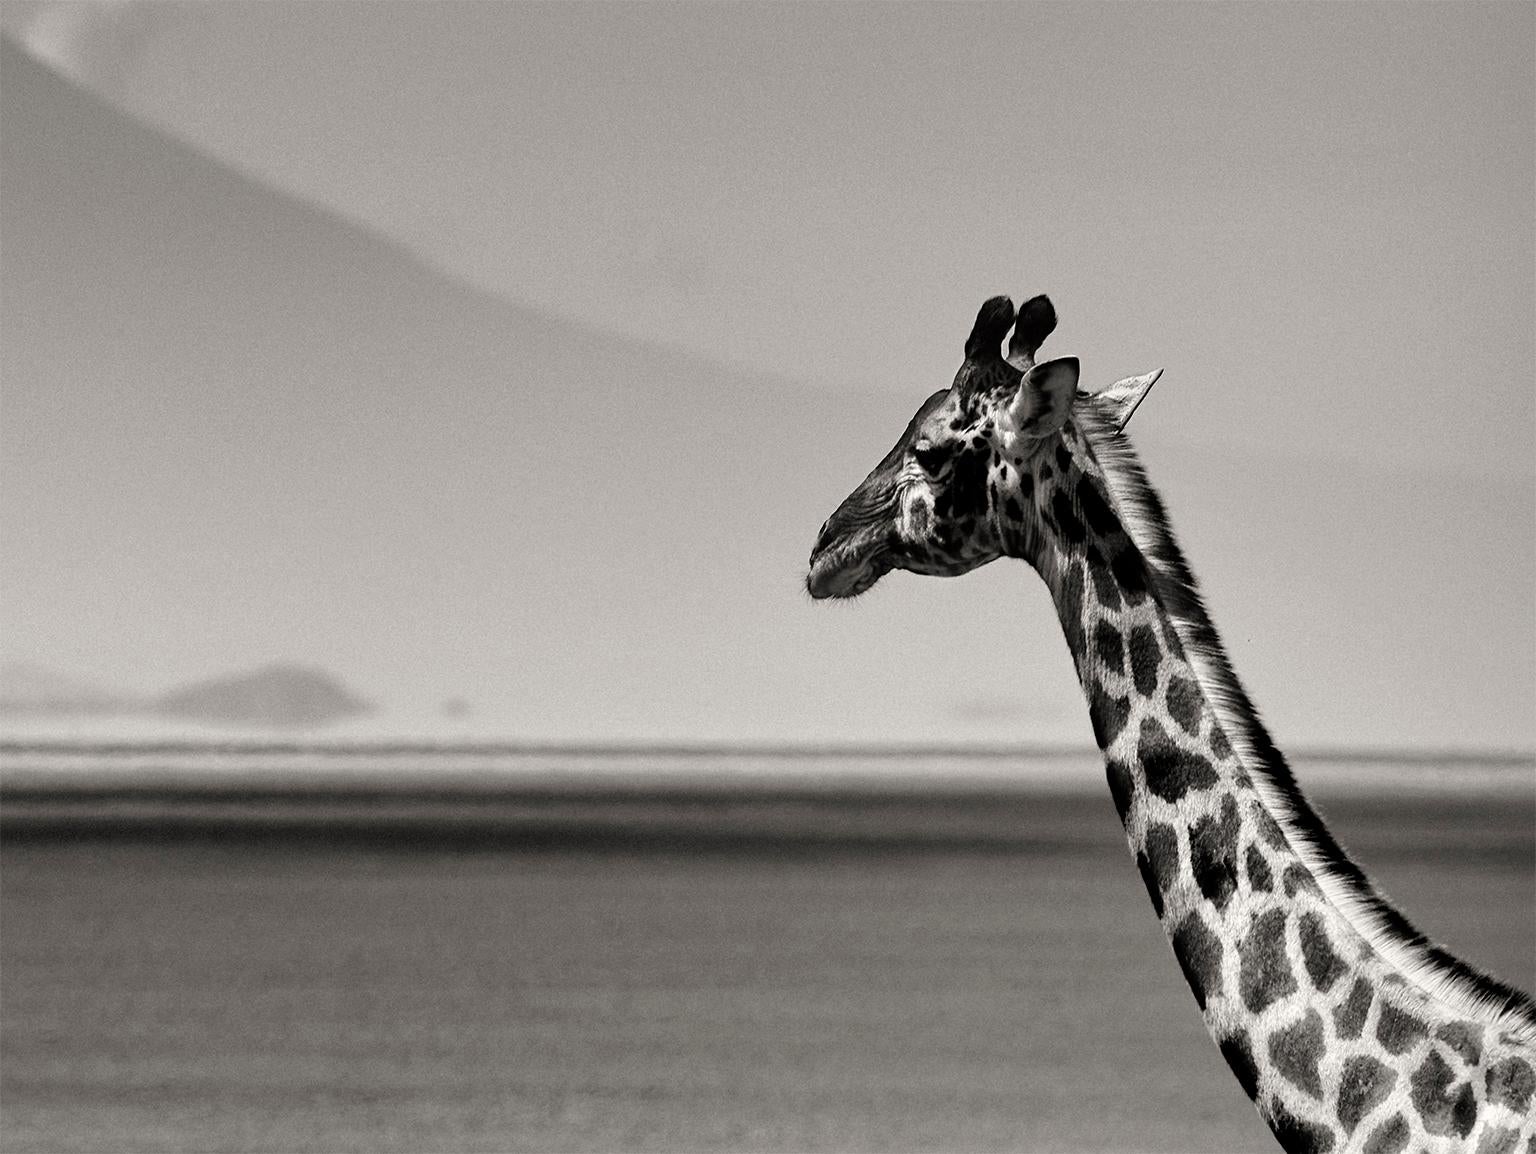 Giraffe in front of MtKenya, Kenya 2019, Giraffe, wildlife, b&w photography - Contemporary Photograph by Joachim Schmeisser